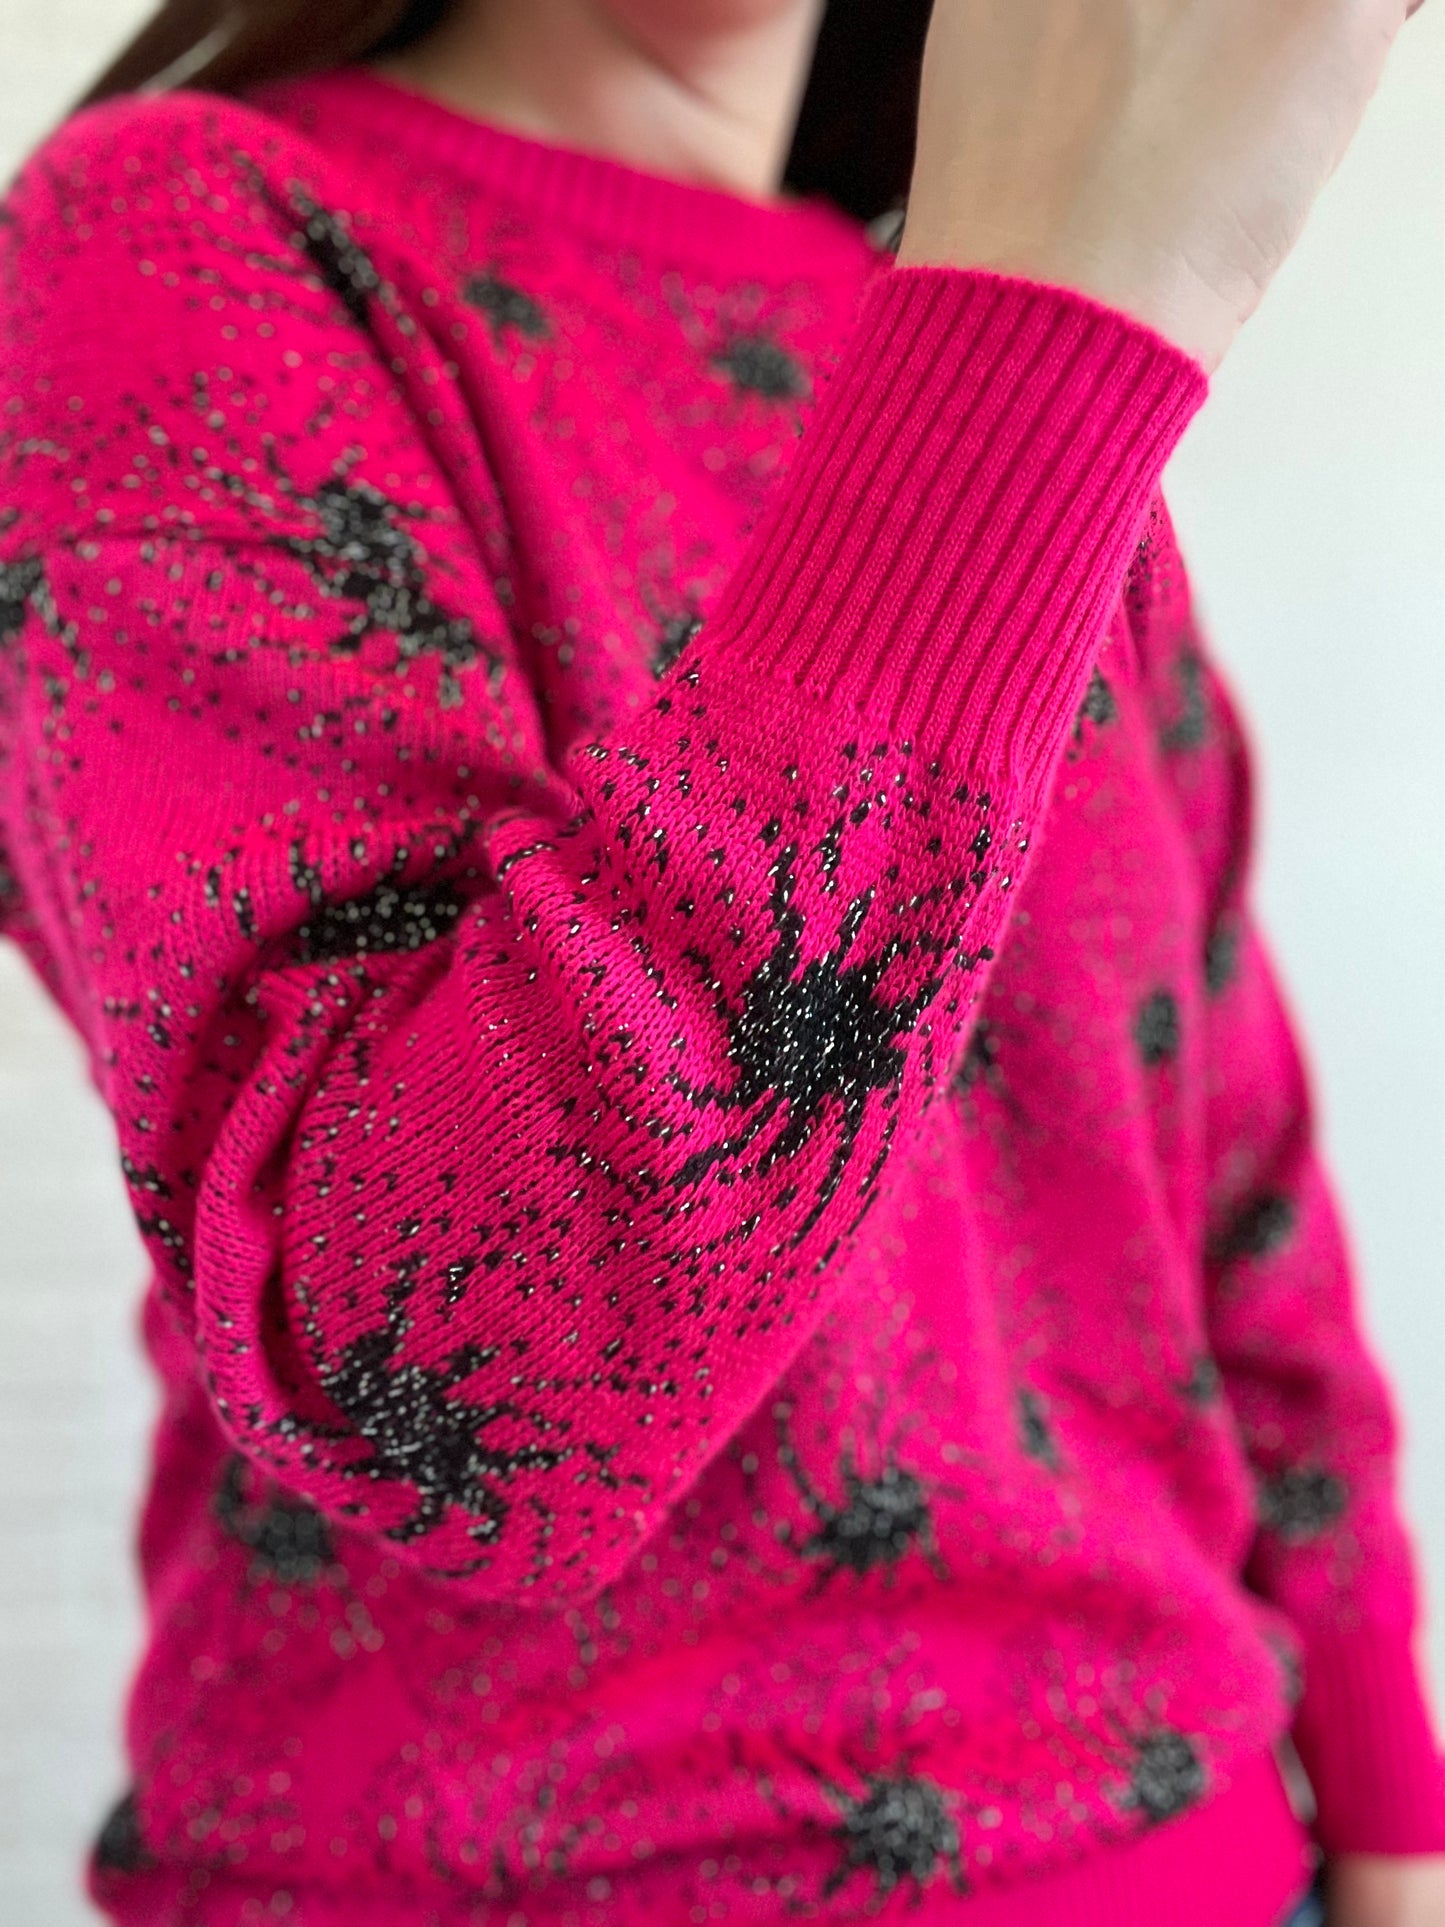 Bombshell Pink Knit Sweater - M